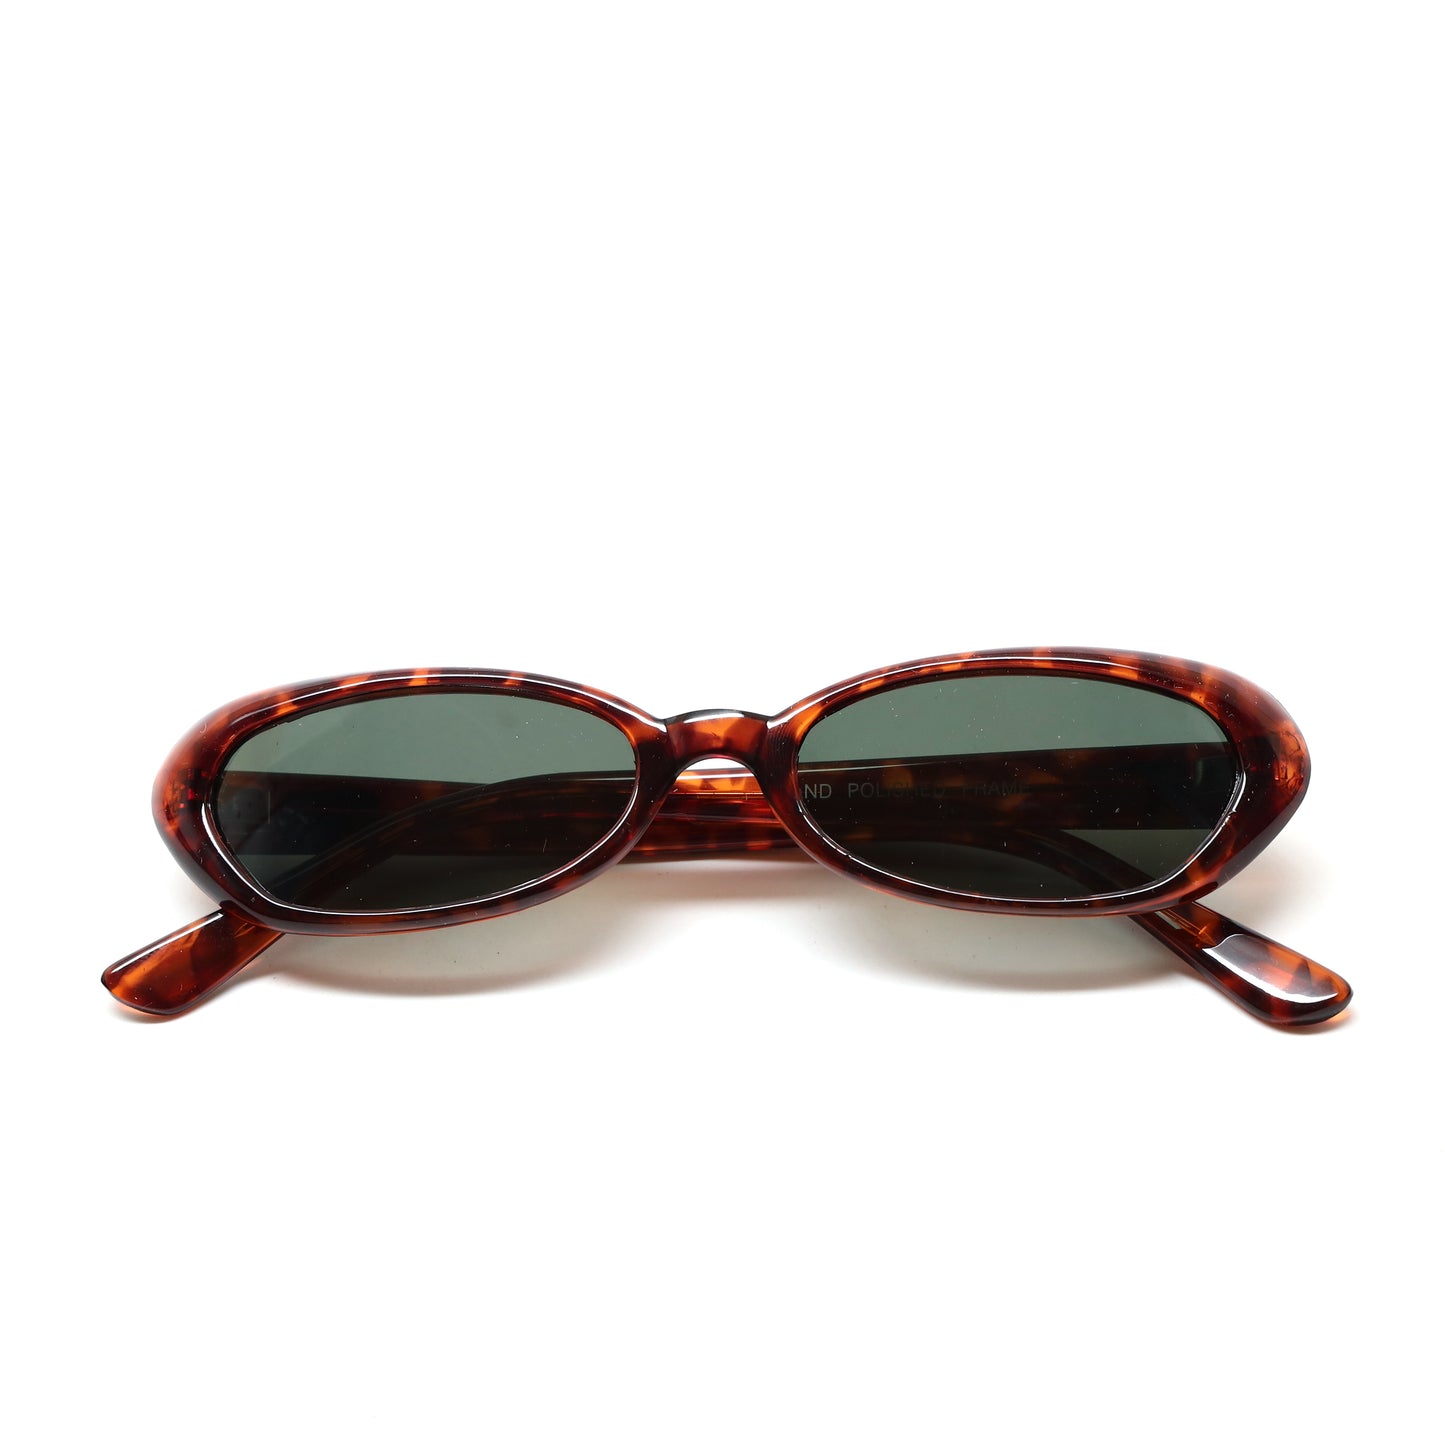 Vintage Small Sized Thin Narrow Shape Redondo Sunglasses - Tortoise